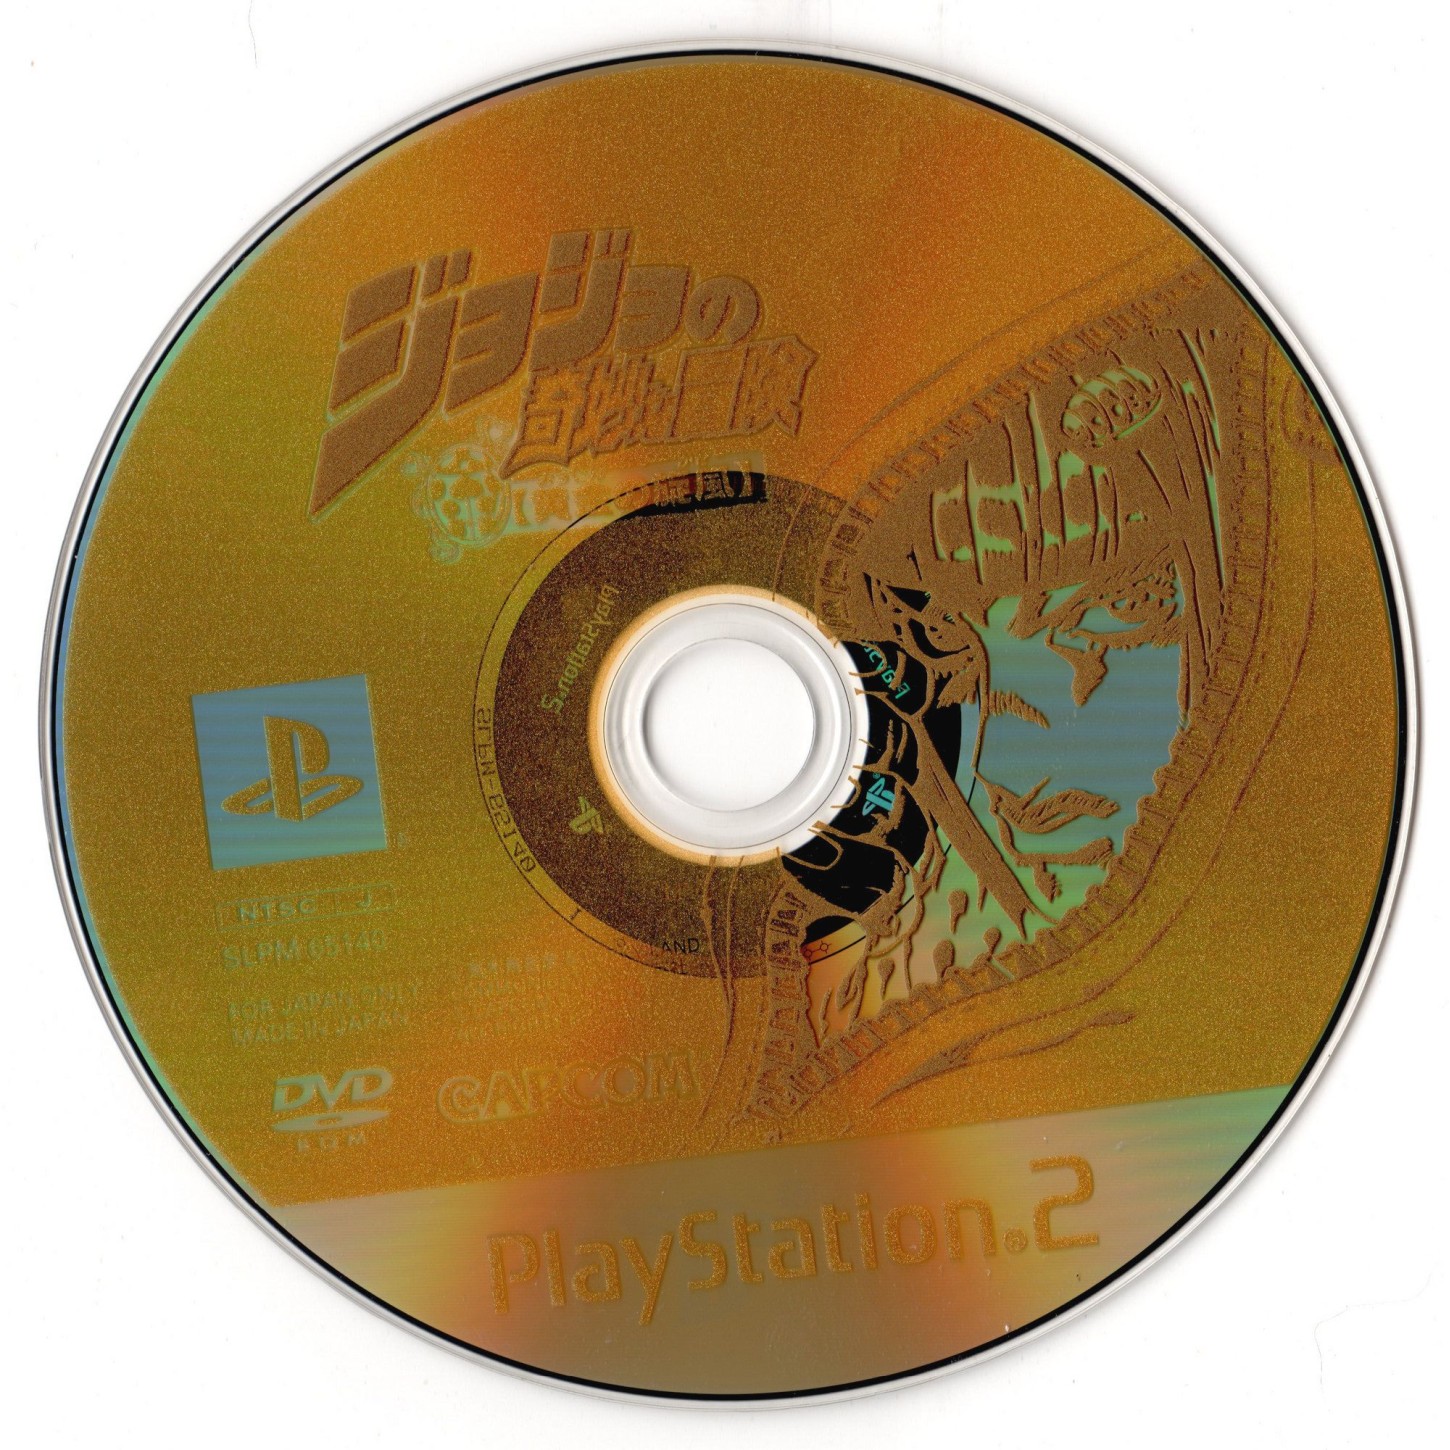 Jojo no Kimyou na Bouken: Ougon no Kaze (PlayStation 2) · RetroAchievements